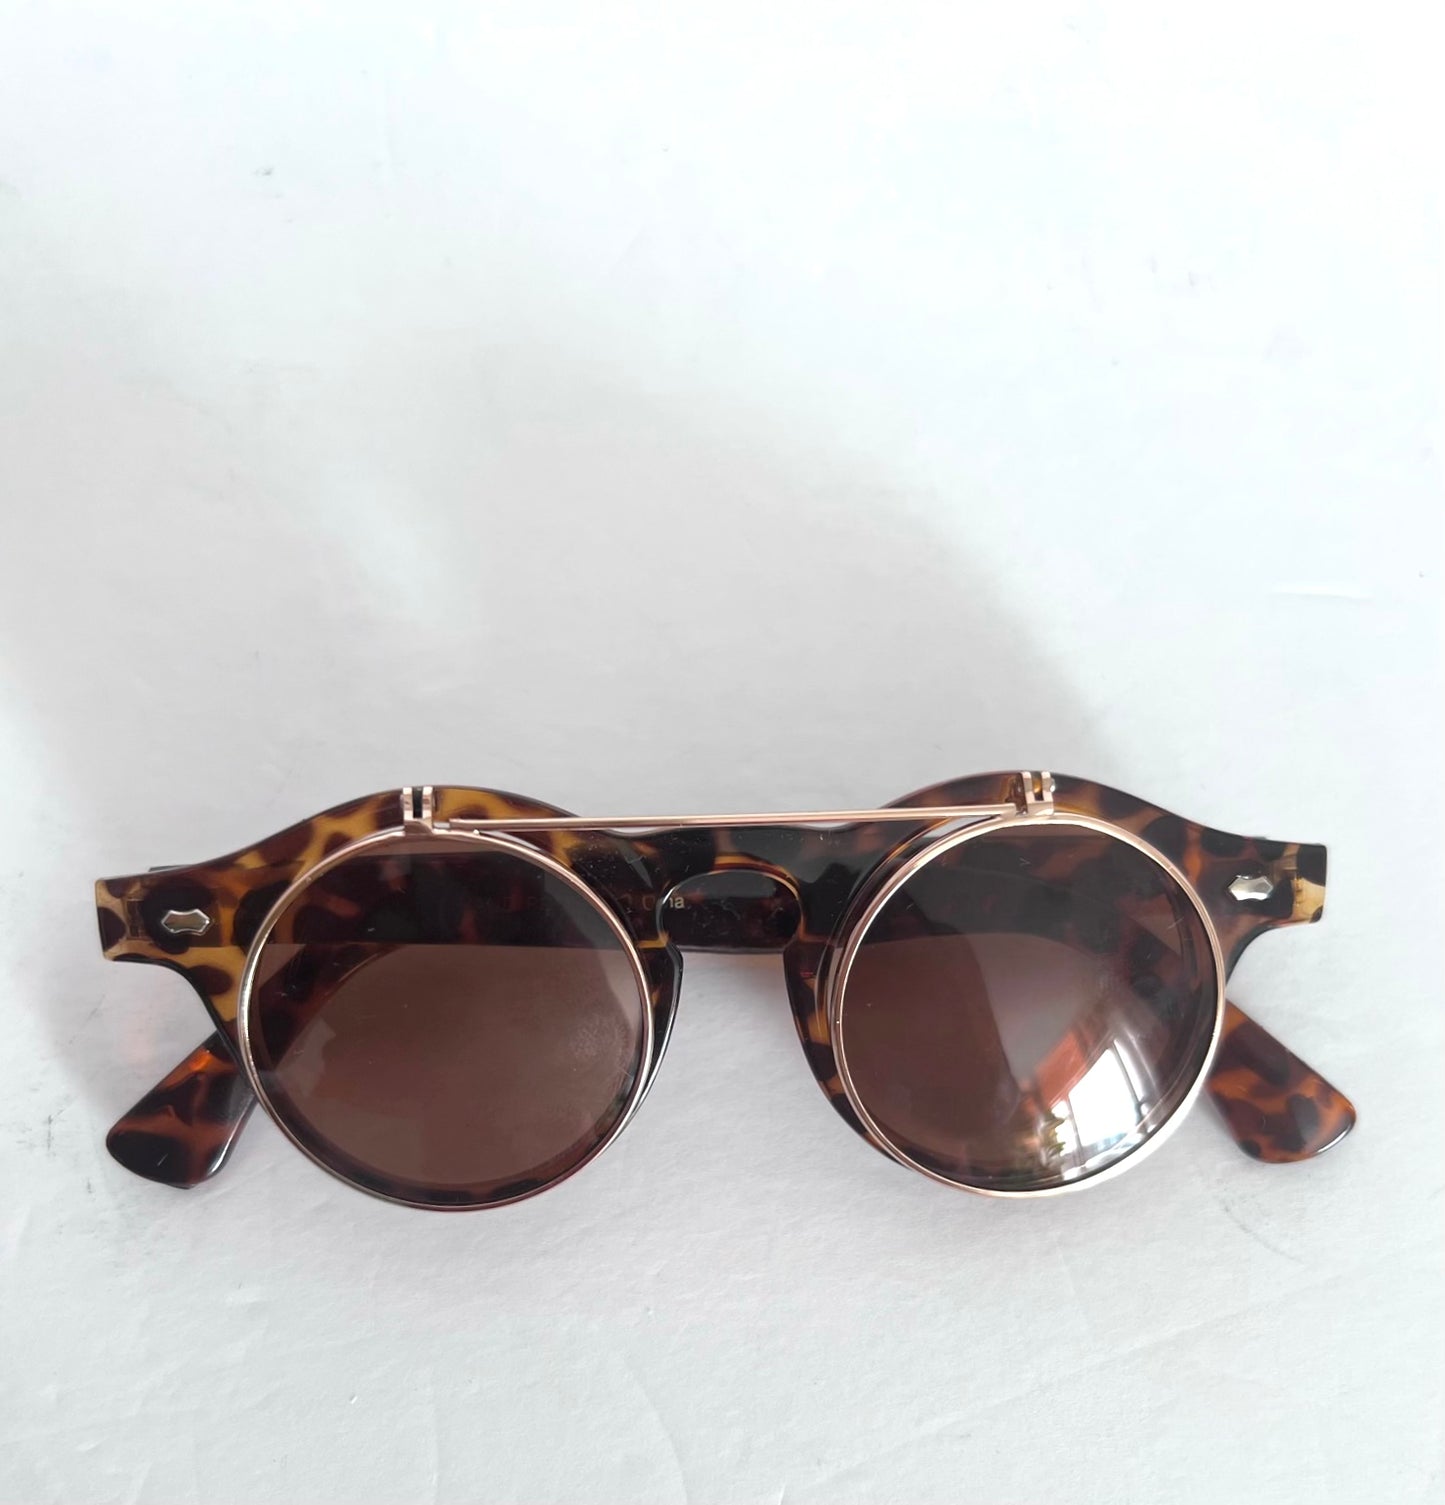 Retro Style Round Lens Tortoise Sunglasses